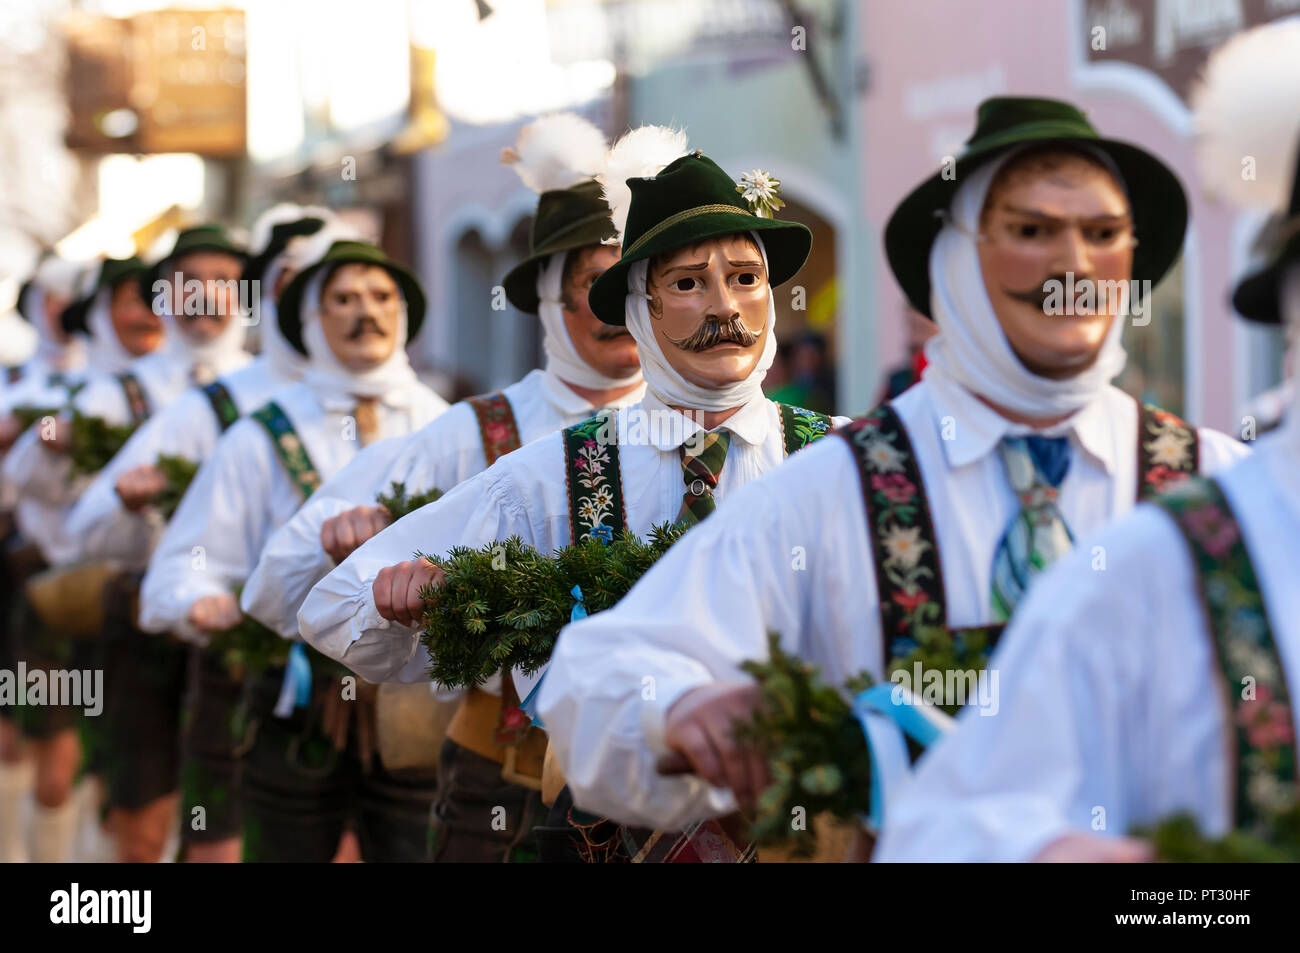 Schellenrührer, Carnival procession, Nonsense Thursday, Mittenwald, Werdenfelser Land, Upper Bavaria, Bavaria, Germany Stock Photo